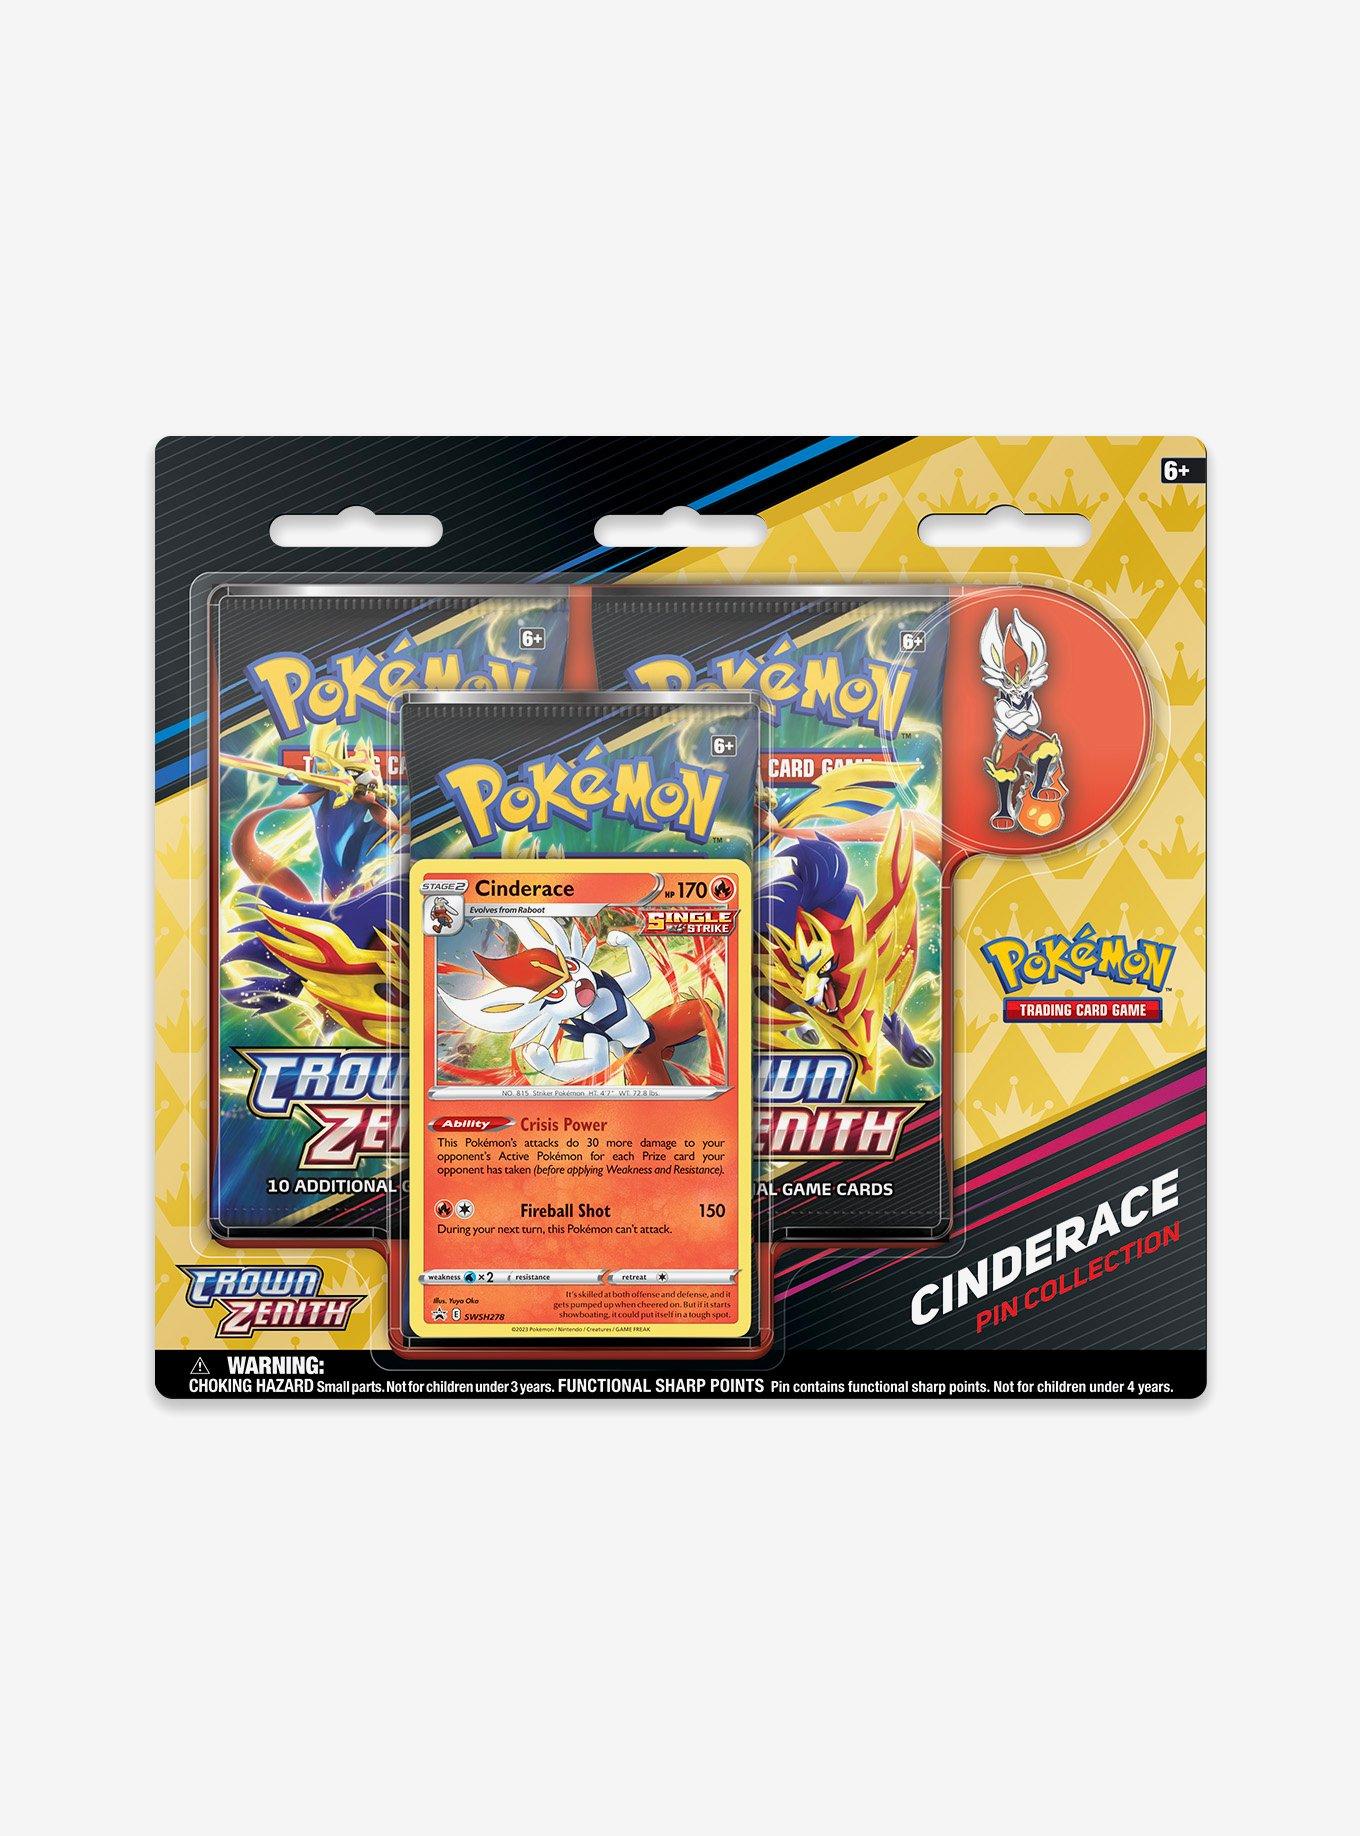 Kids WB Presents Pokémon The First Movie : 4 Promo Cards - Fantastic Set  CLASSIC